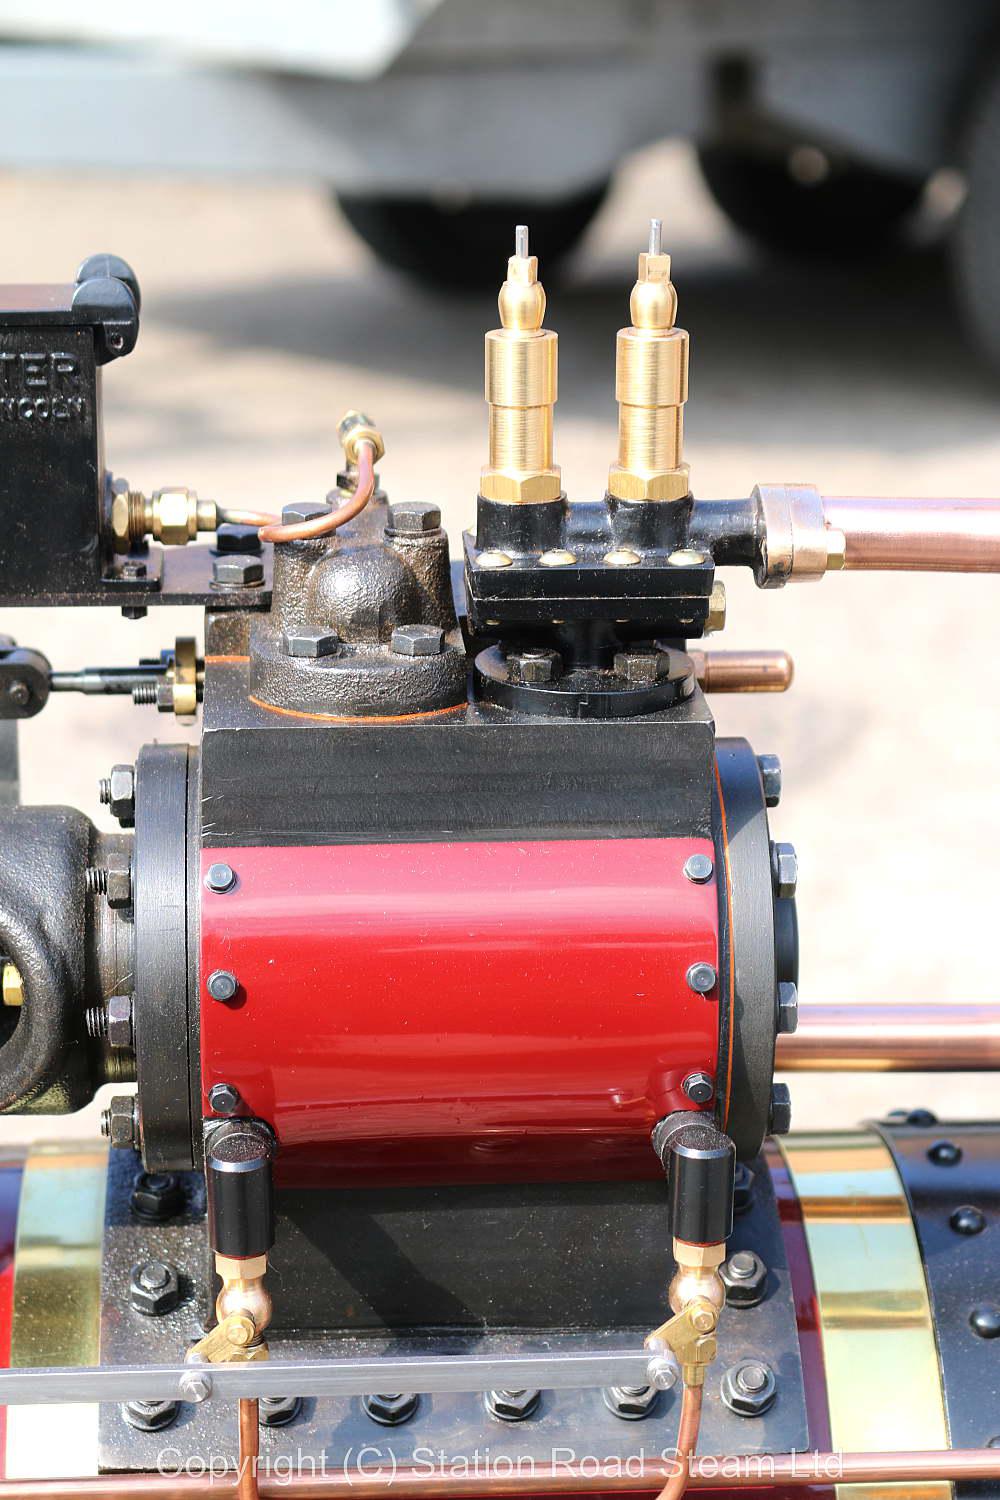 4 inch scale Savage Little Samson traction engine